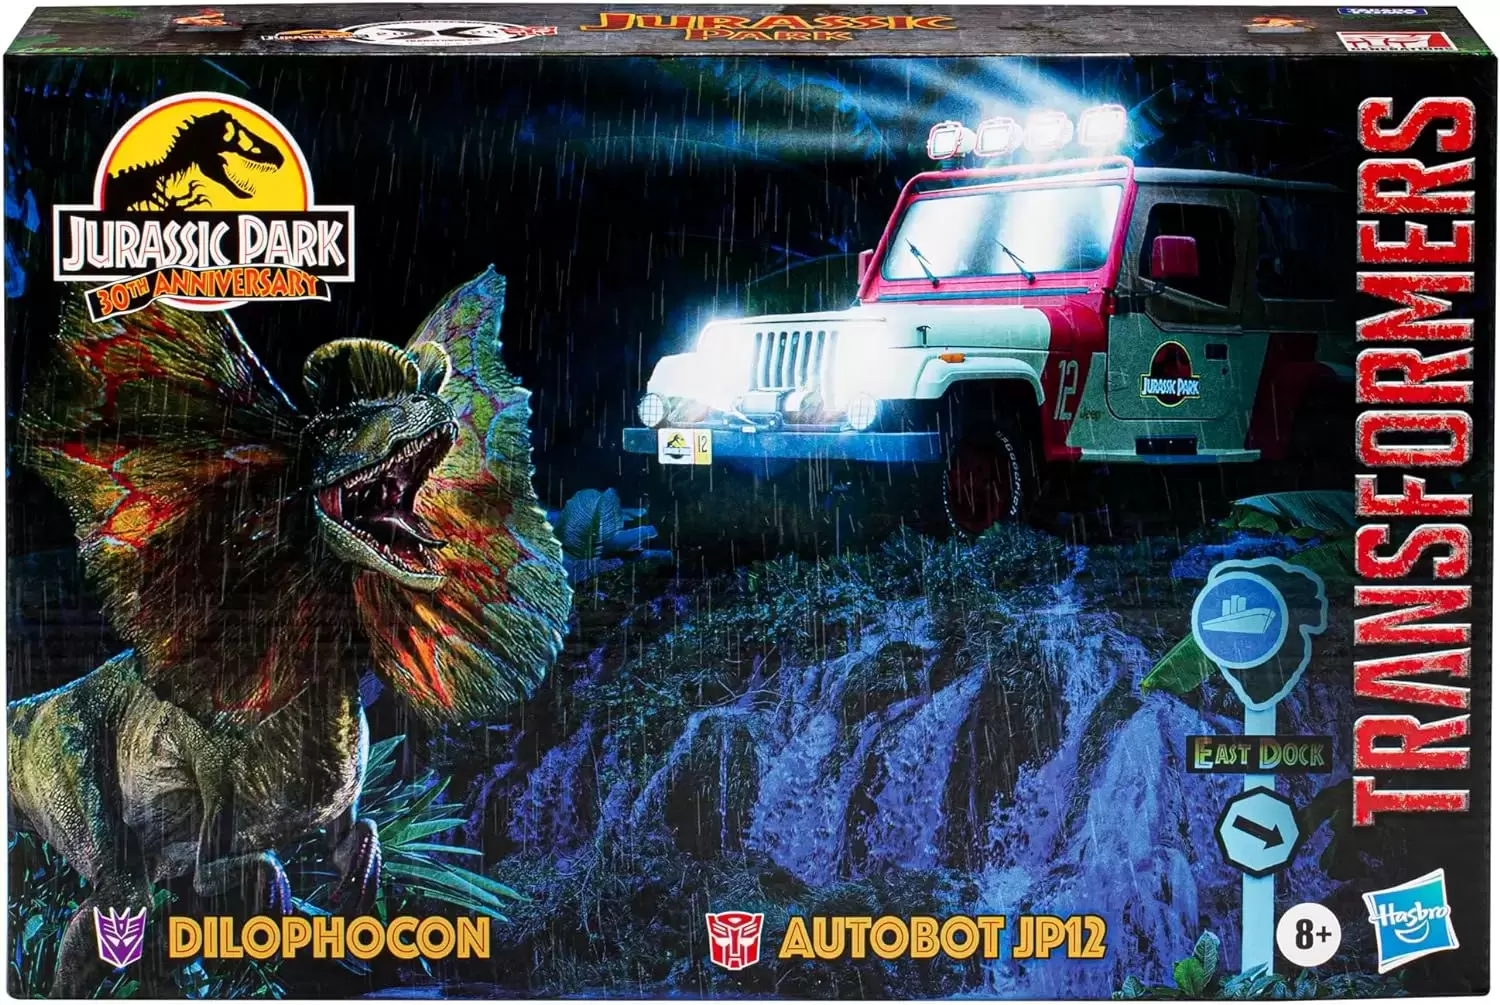 Transformers Collaborative - Transformers Jurassic Park 30th Anniversary Dipophocon Autobot JP12